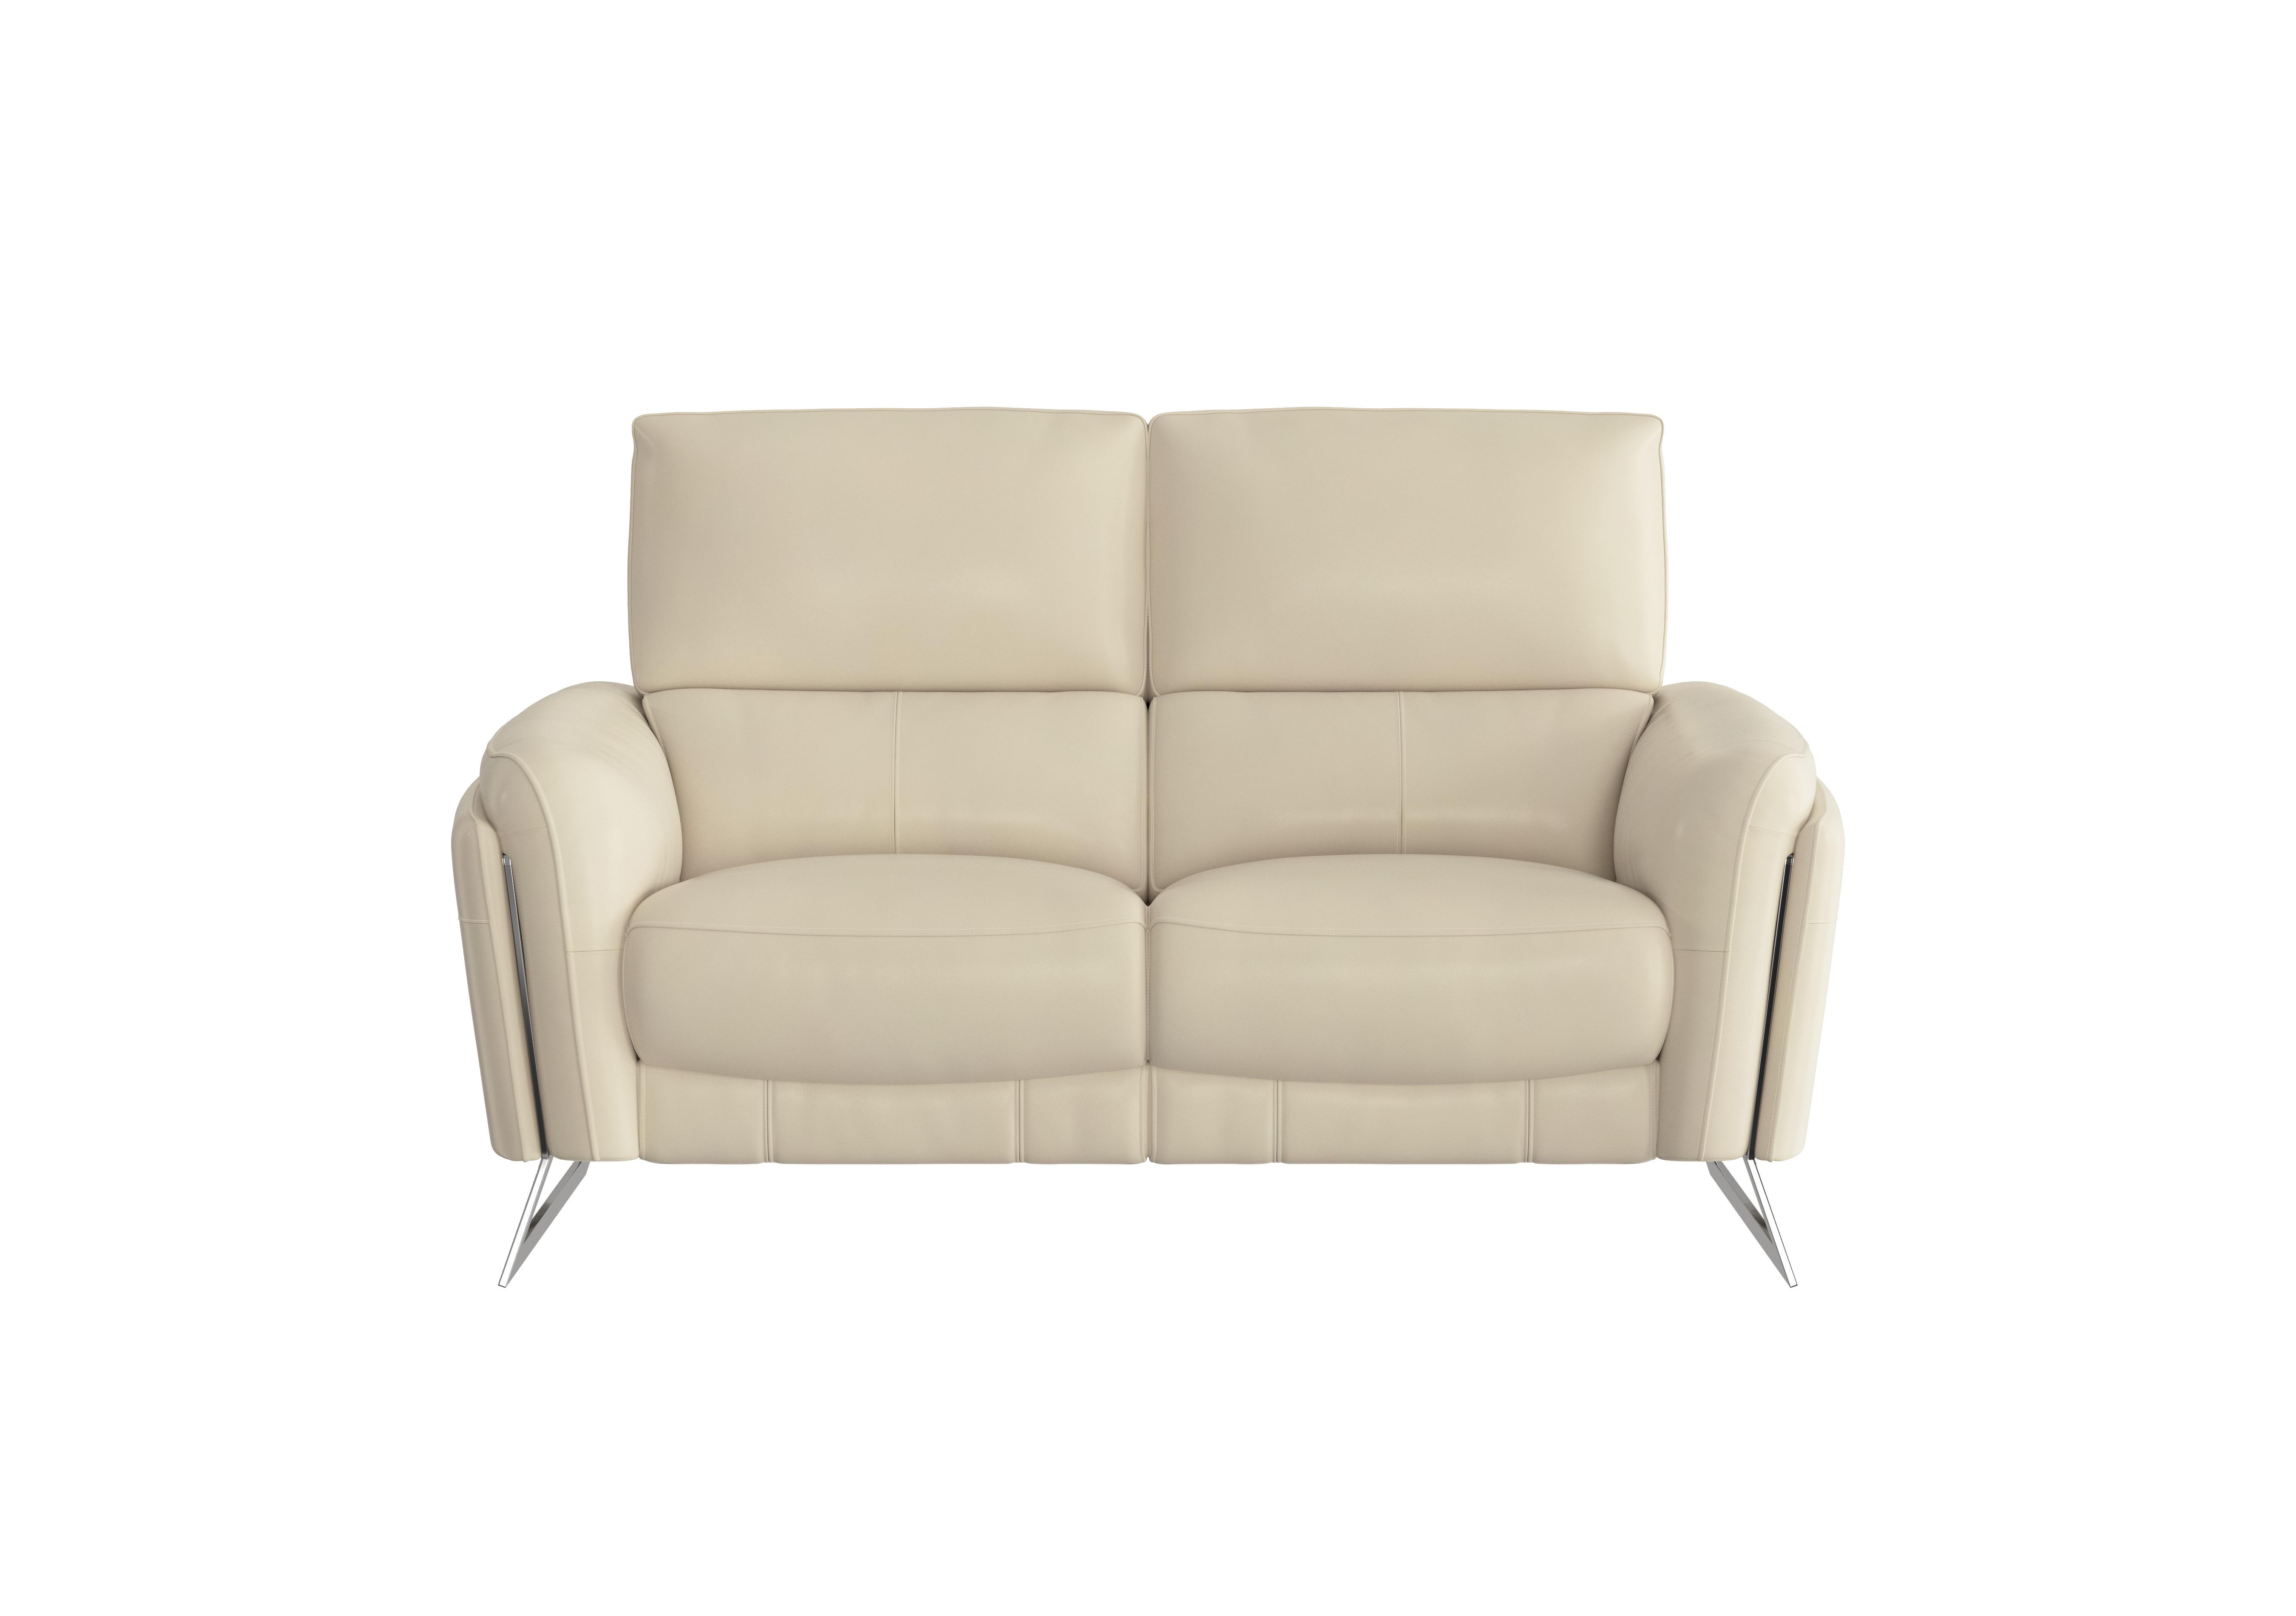 Amarilla 2 Seater Leather Sofa in Bv-862c Bisque on Furniture Village